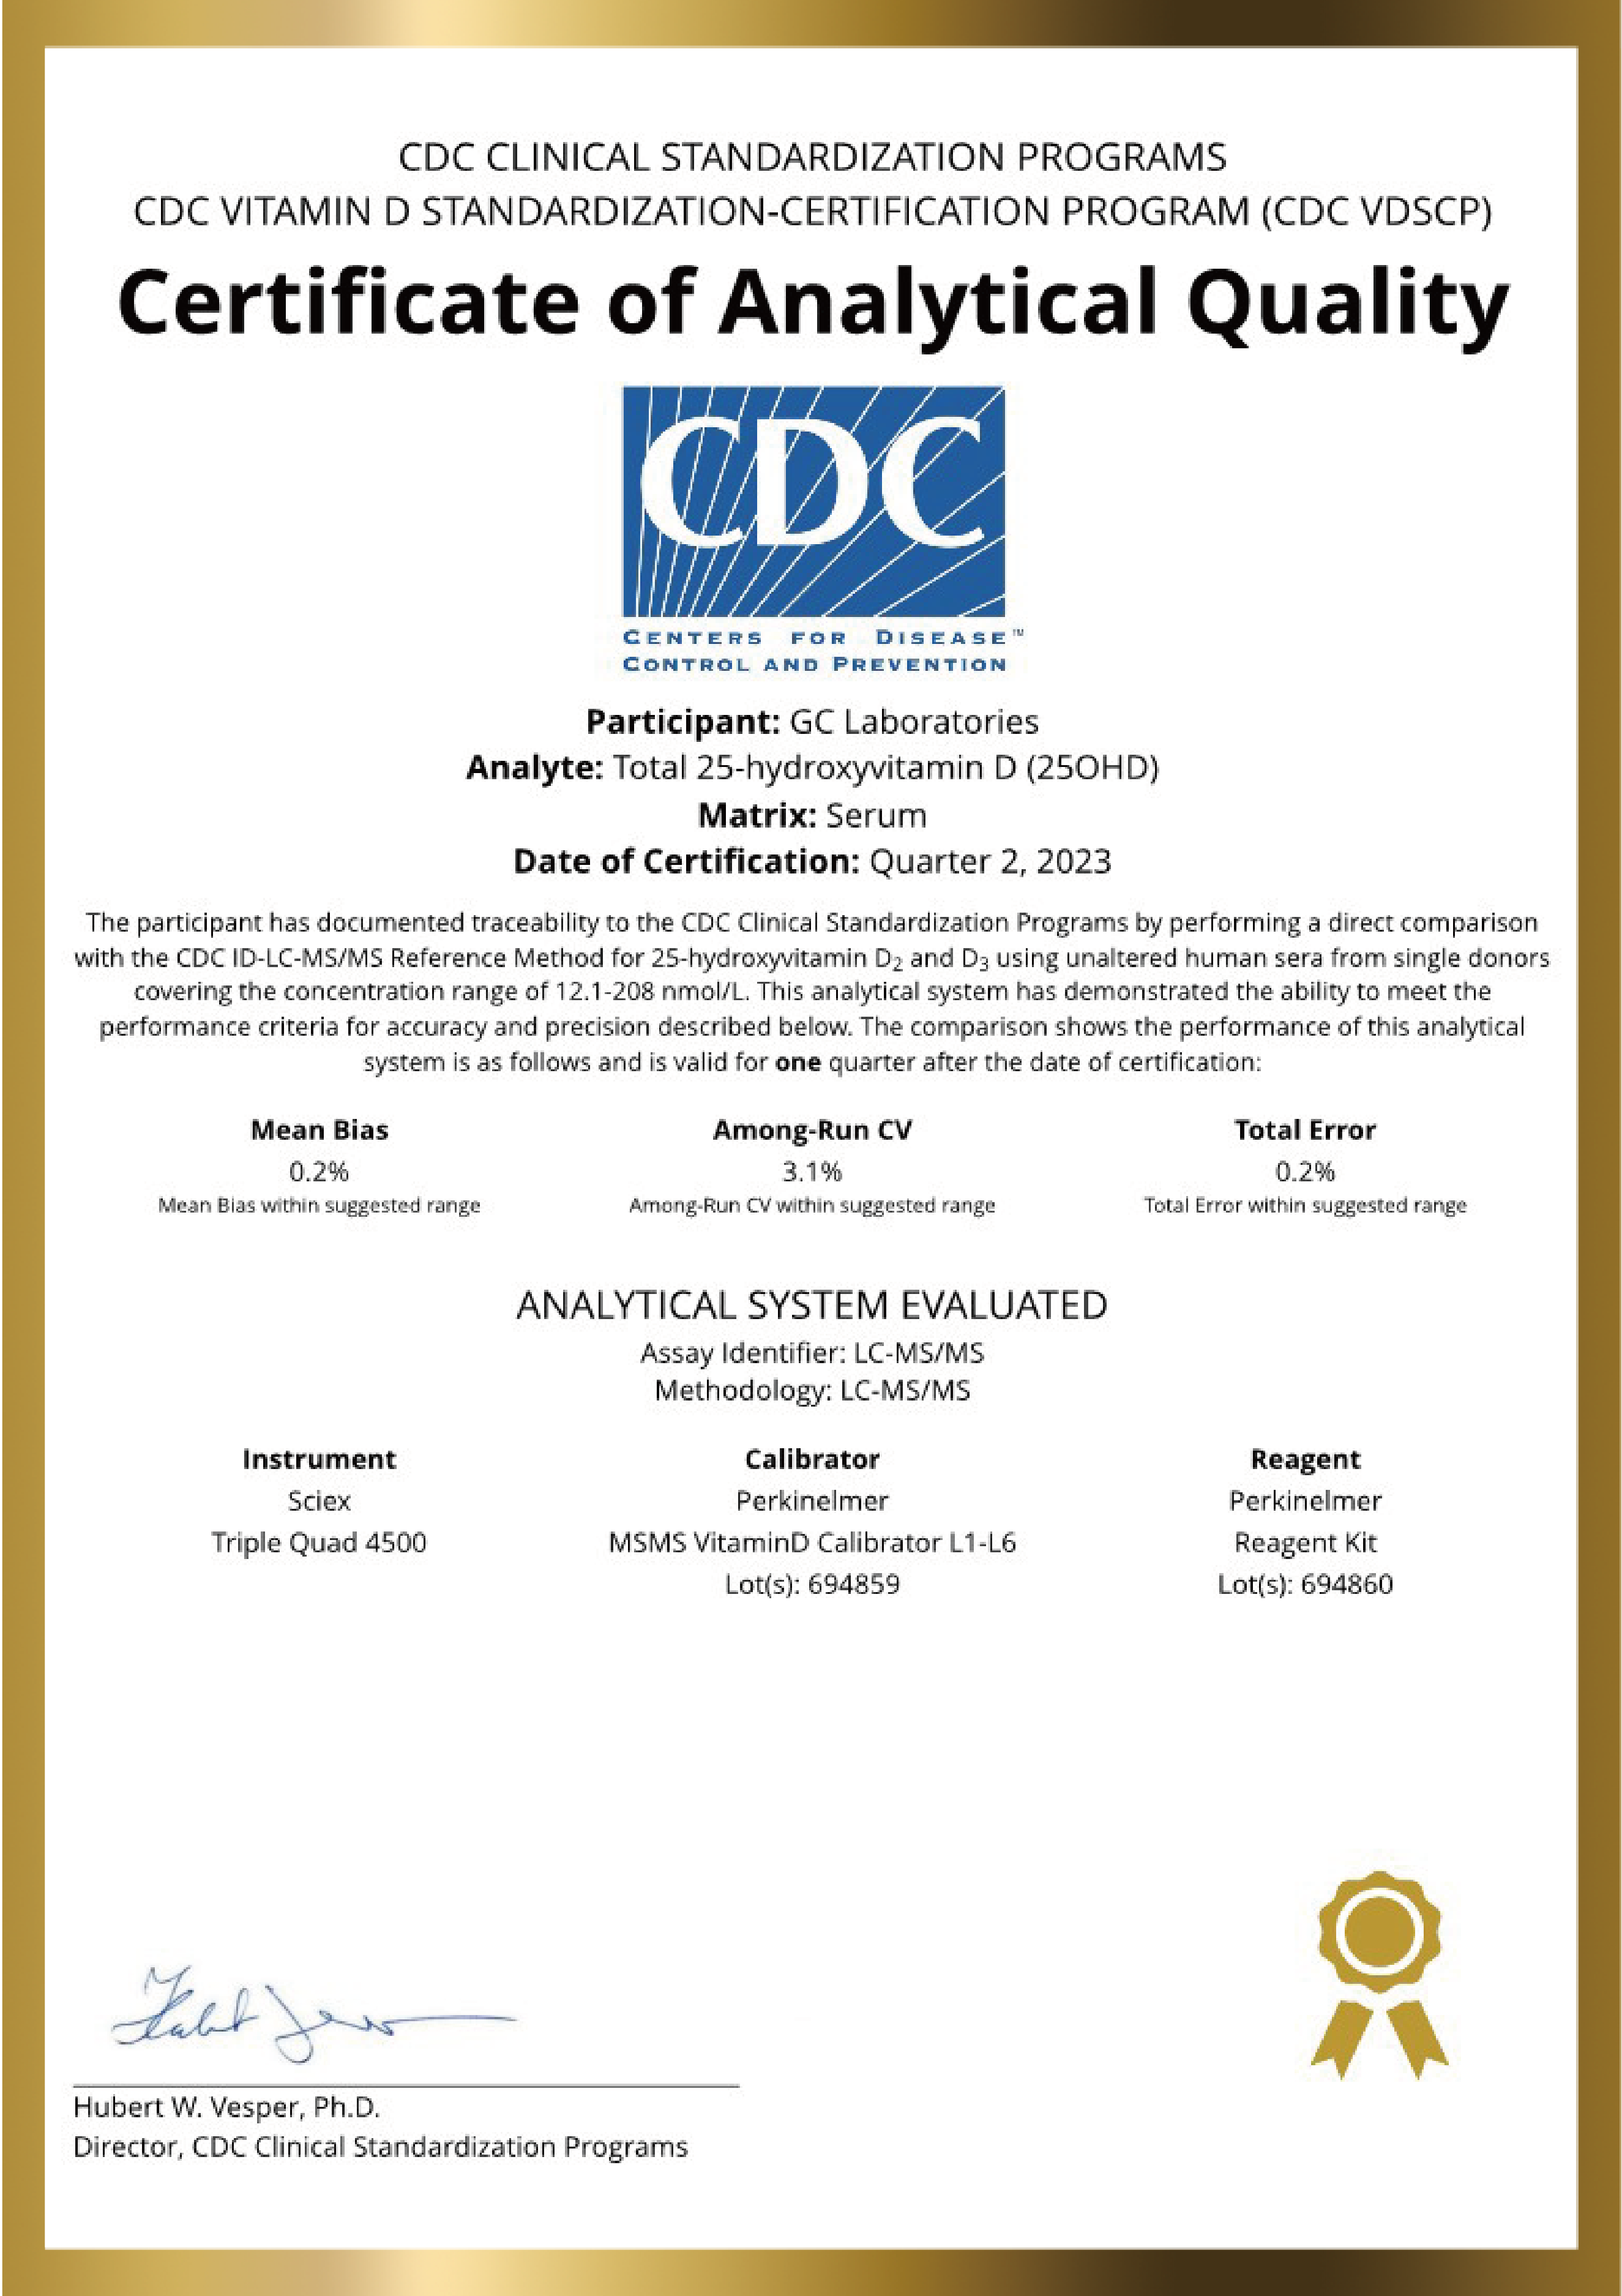 CDC VDSCP